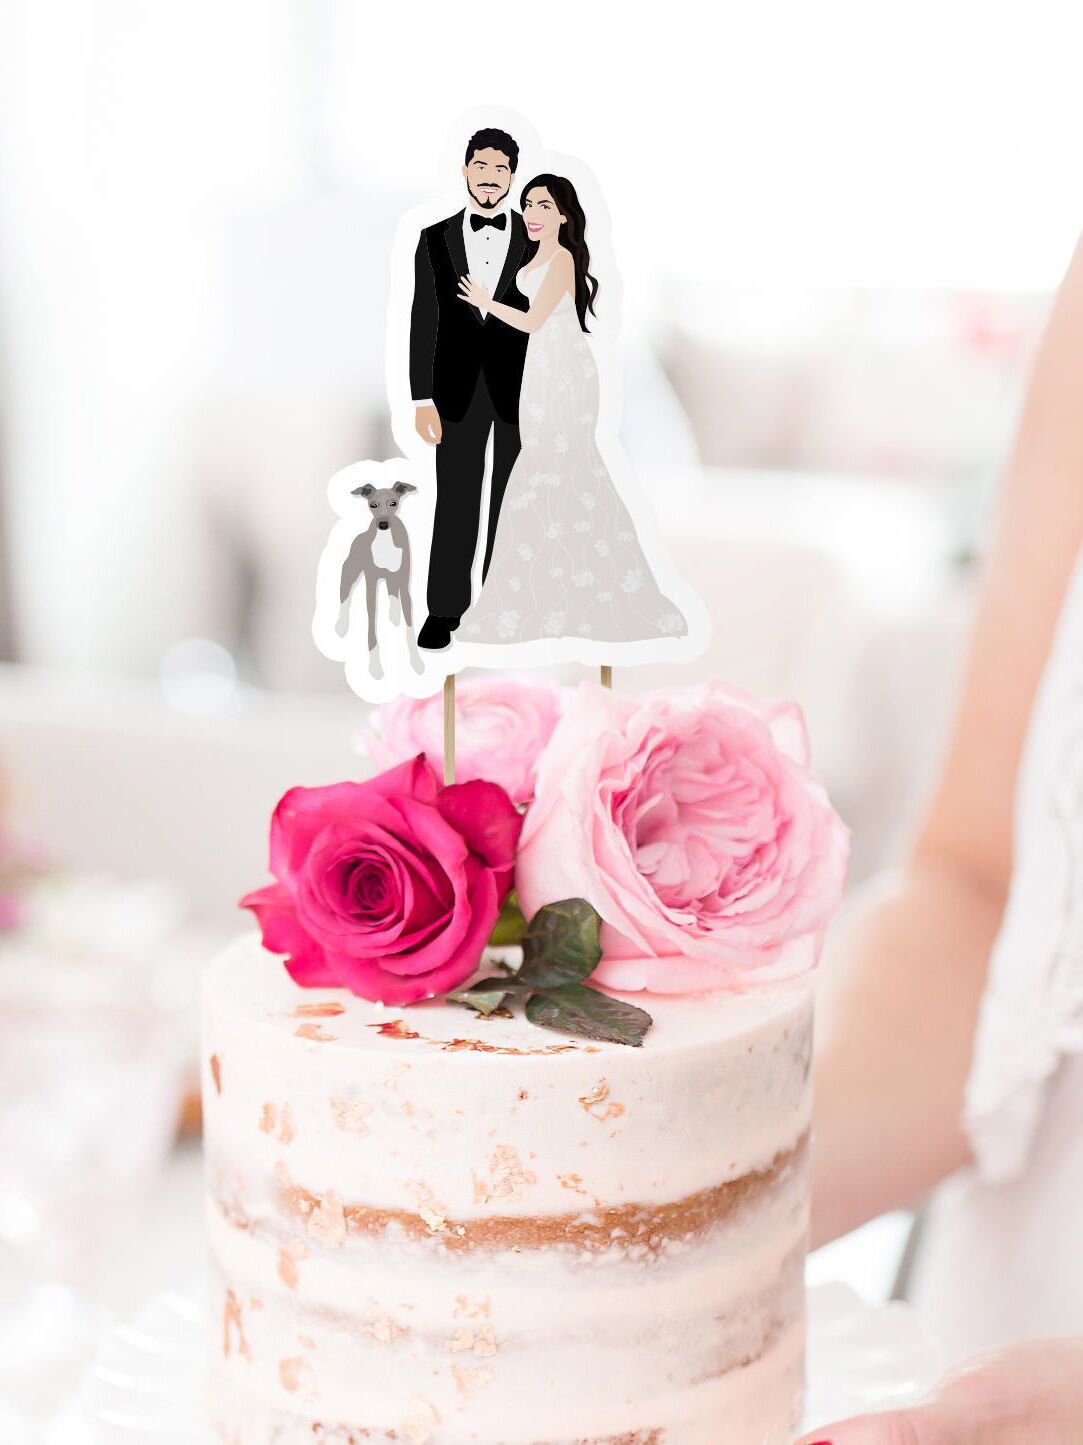 Retrato de bolo de casamento personalizado